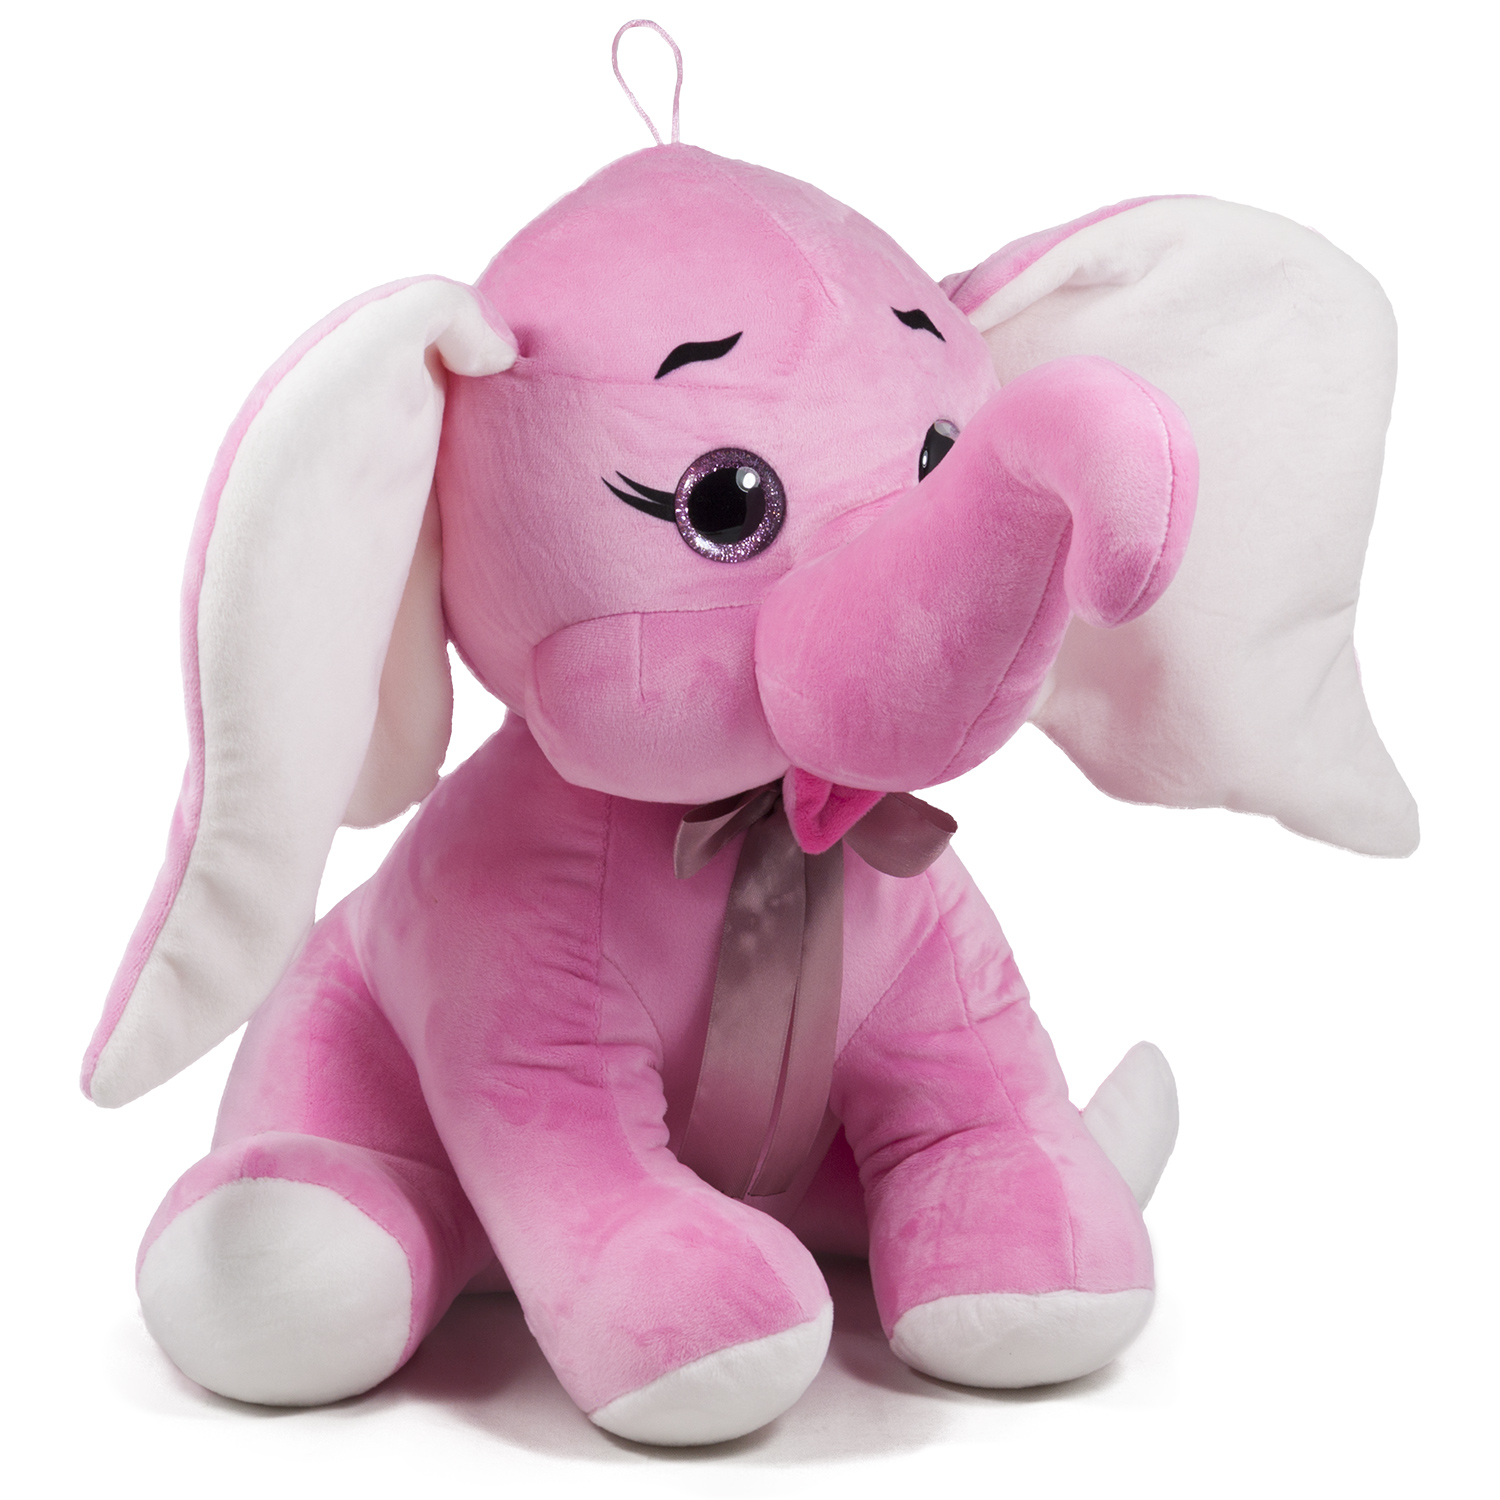 Elephant with brocade eyes - Pink